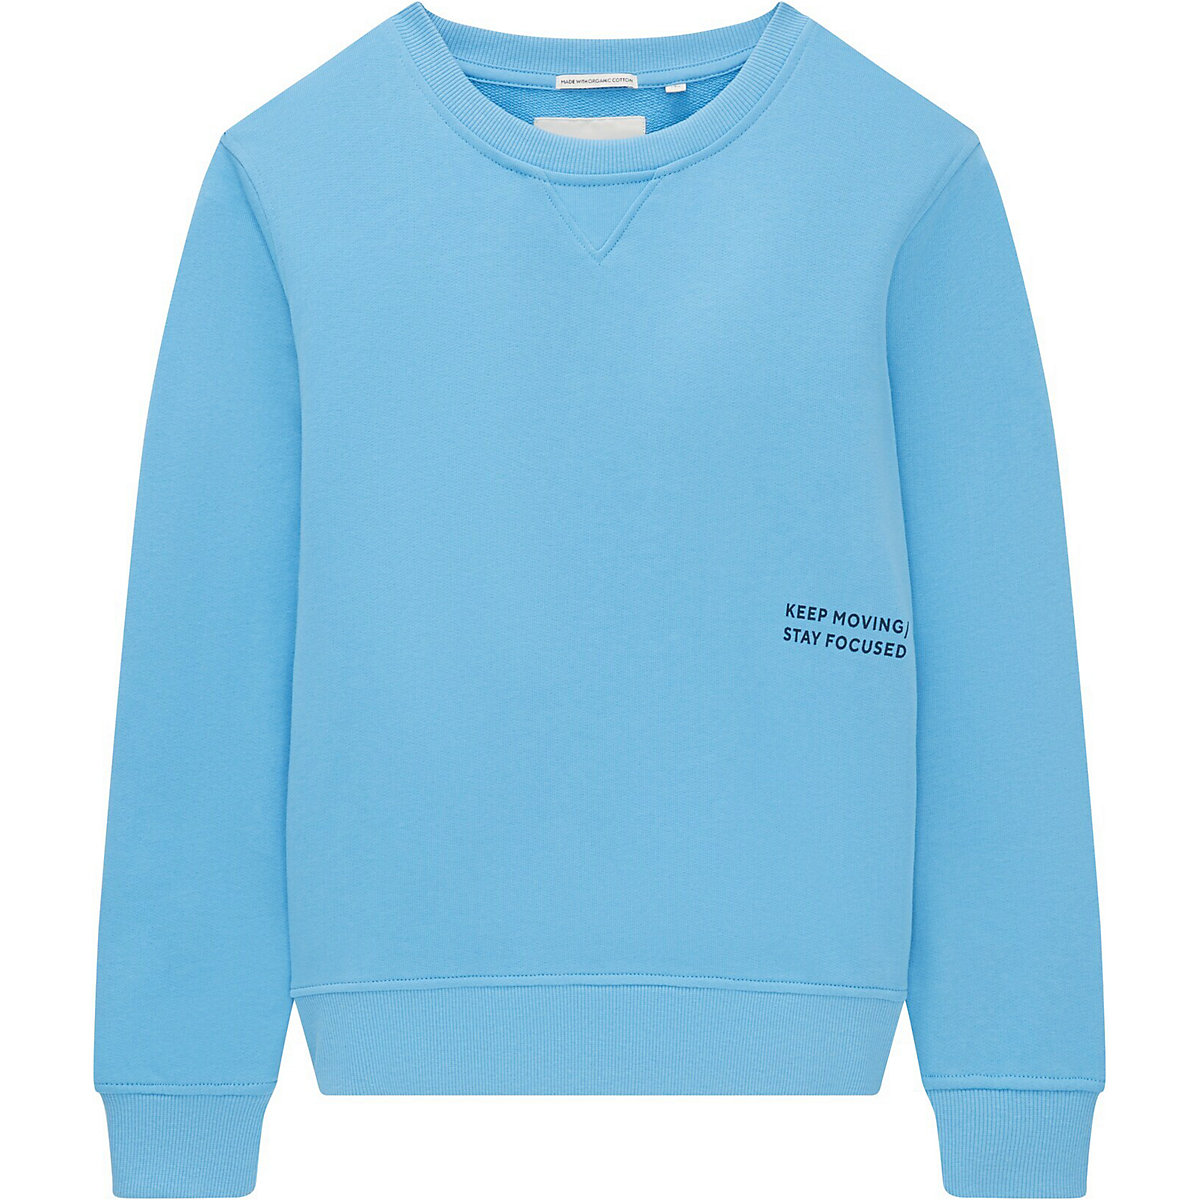 TOM TAILOR Strick & Sweatshirts Sweatshirt mit Textprint  Kapuzenpullover dunkelblau